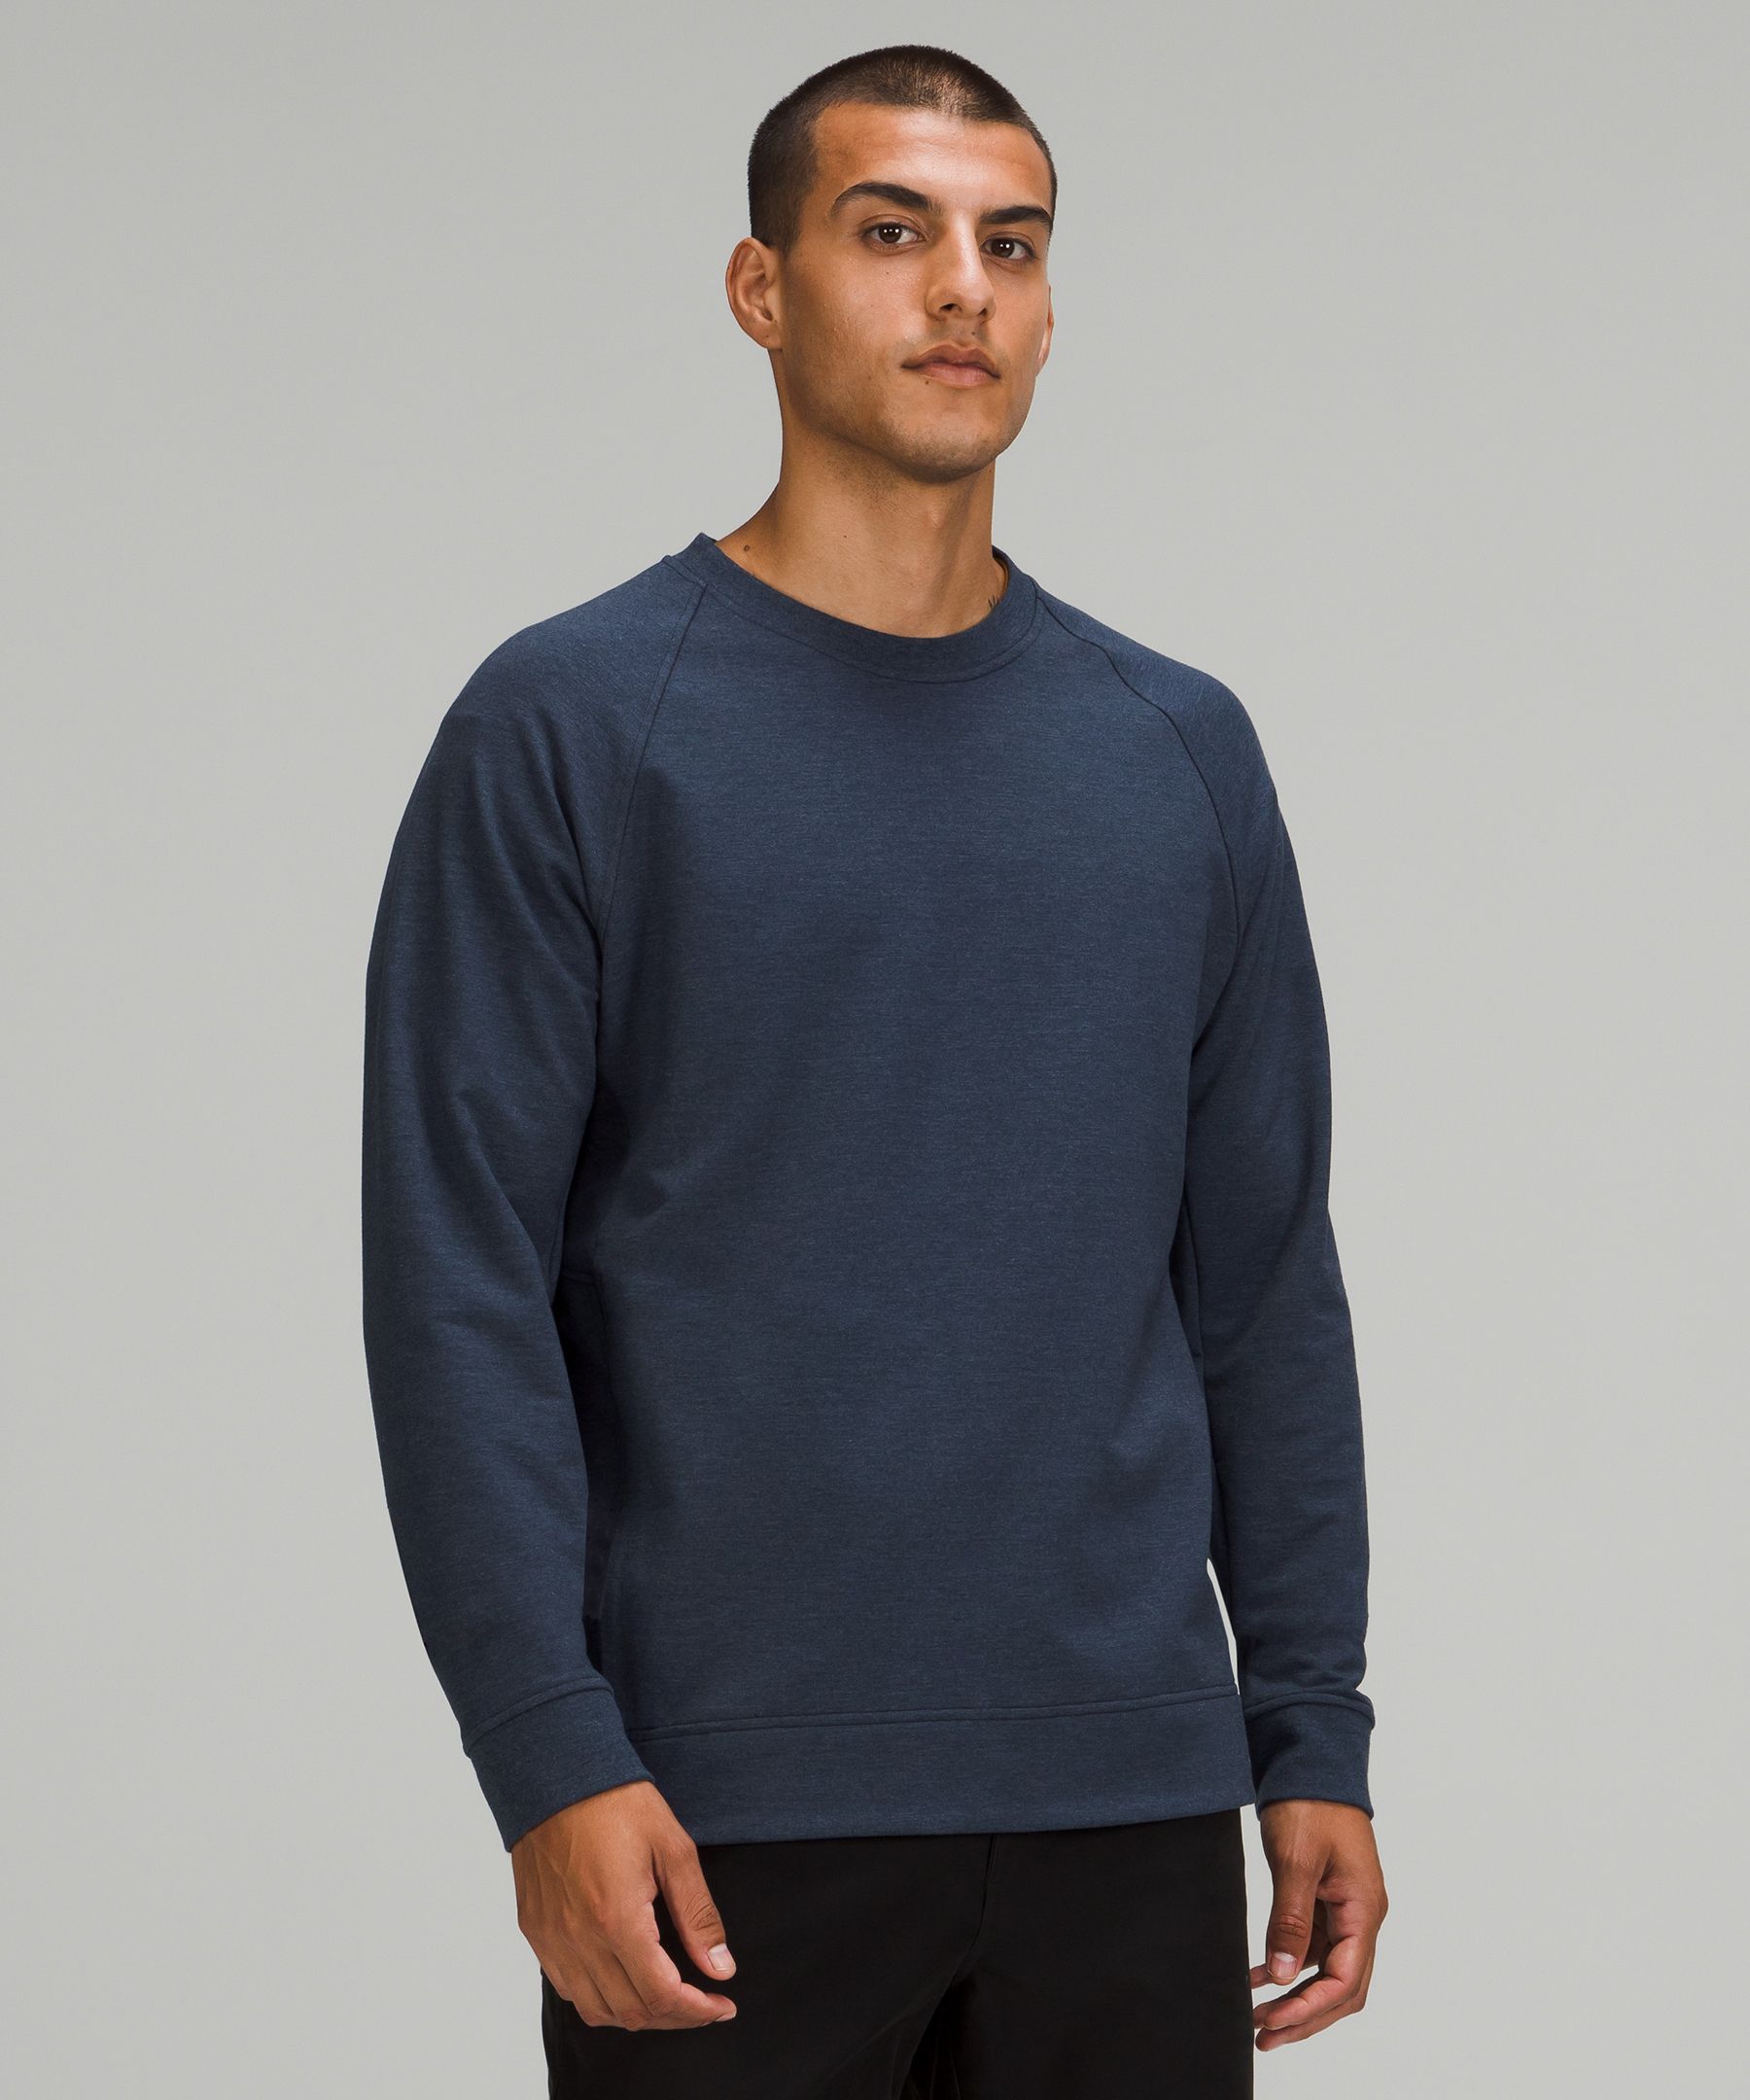 Lululemon Athletica Sweatshirt Crew Neck Long Sleeve Pullover Casual Grey  Blue 8